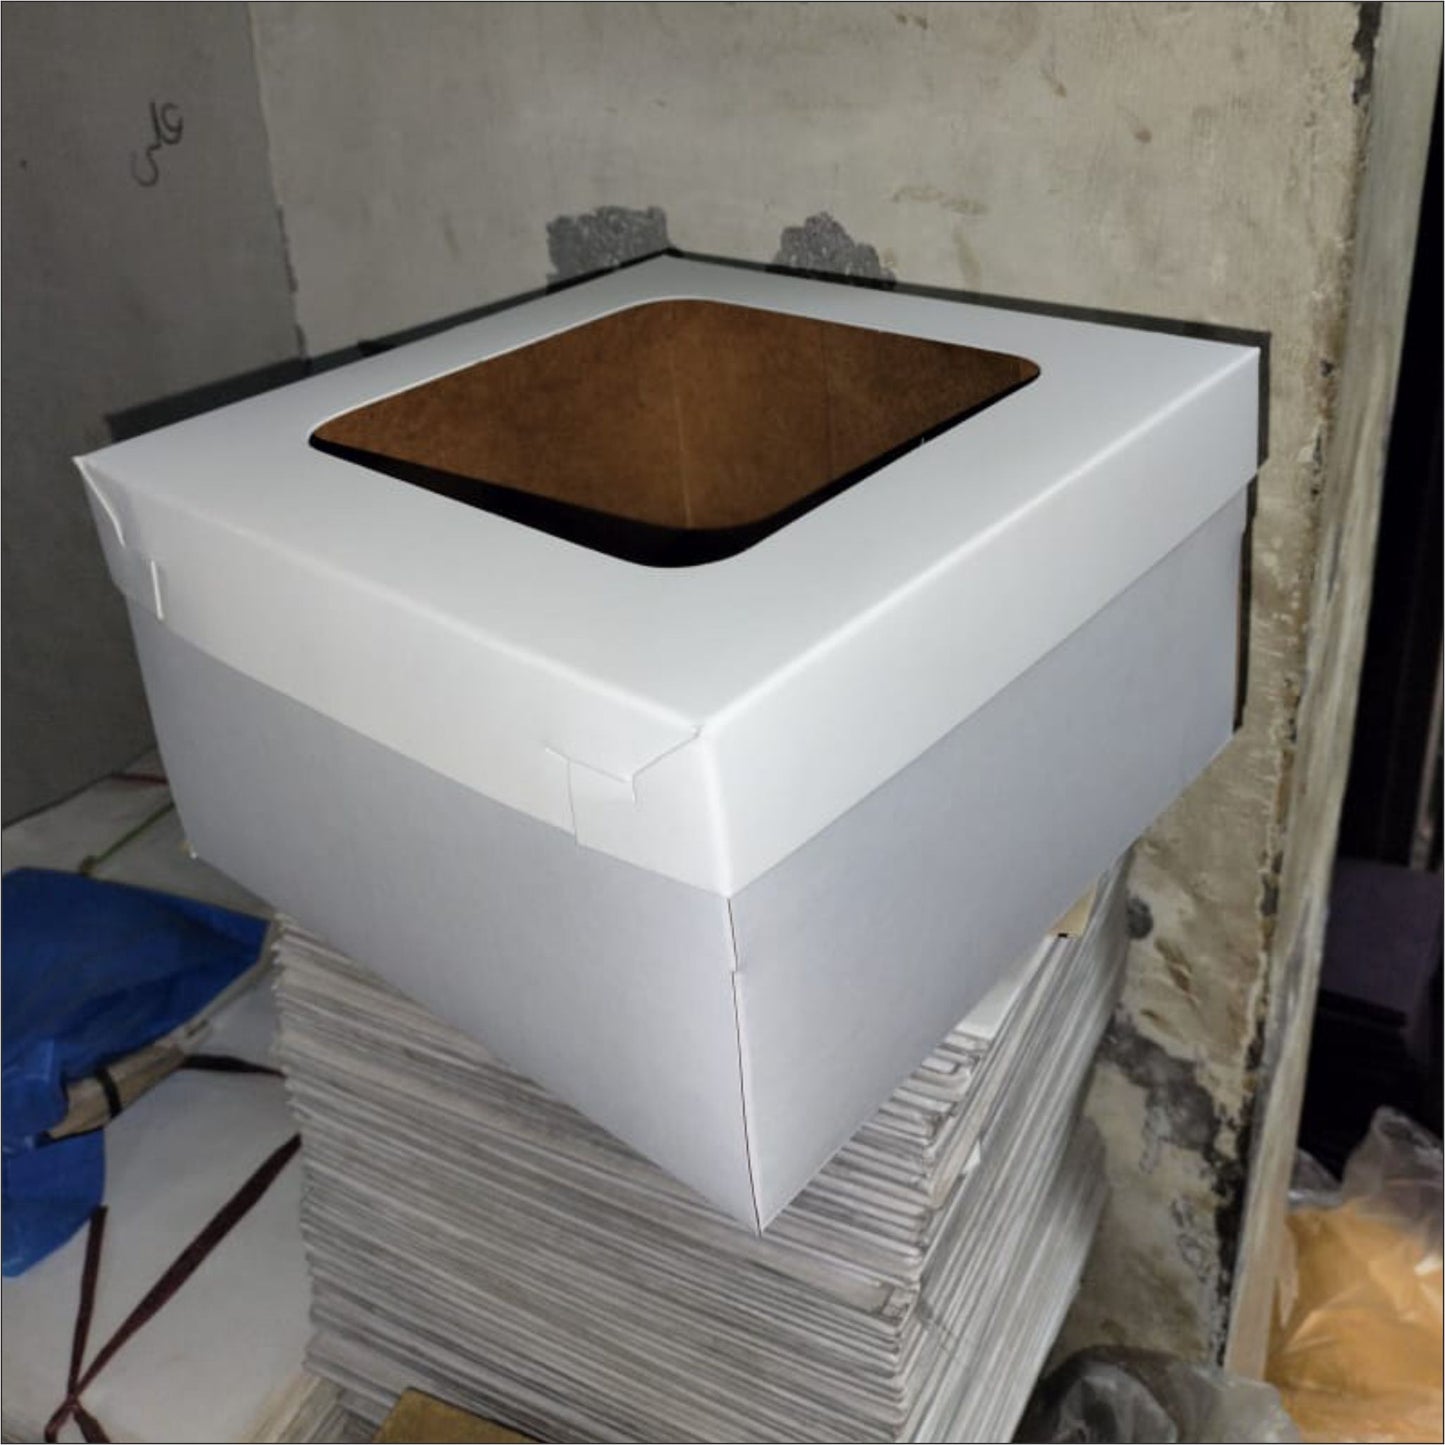 12x12x7 inch Cake Box